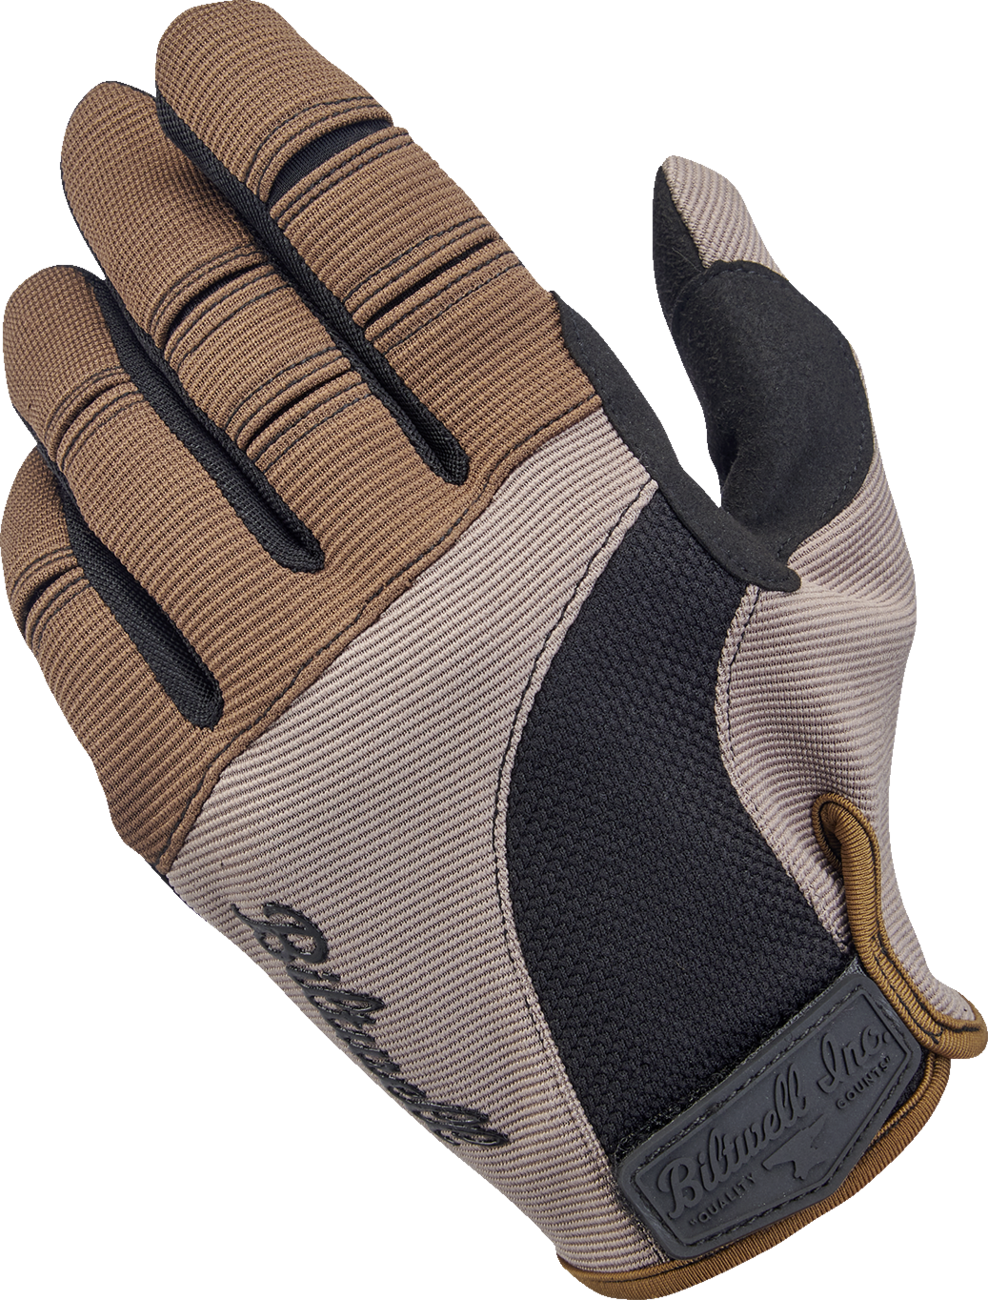 BILTWELL Moto Gloves - Coyote/Black - XS 1501-1301-001